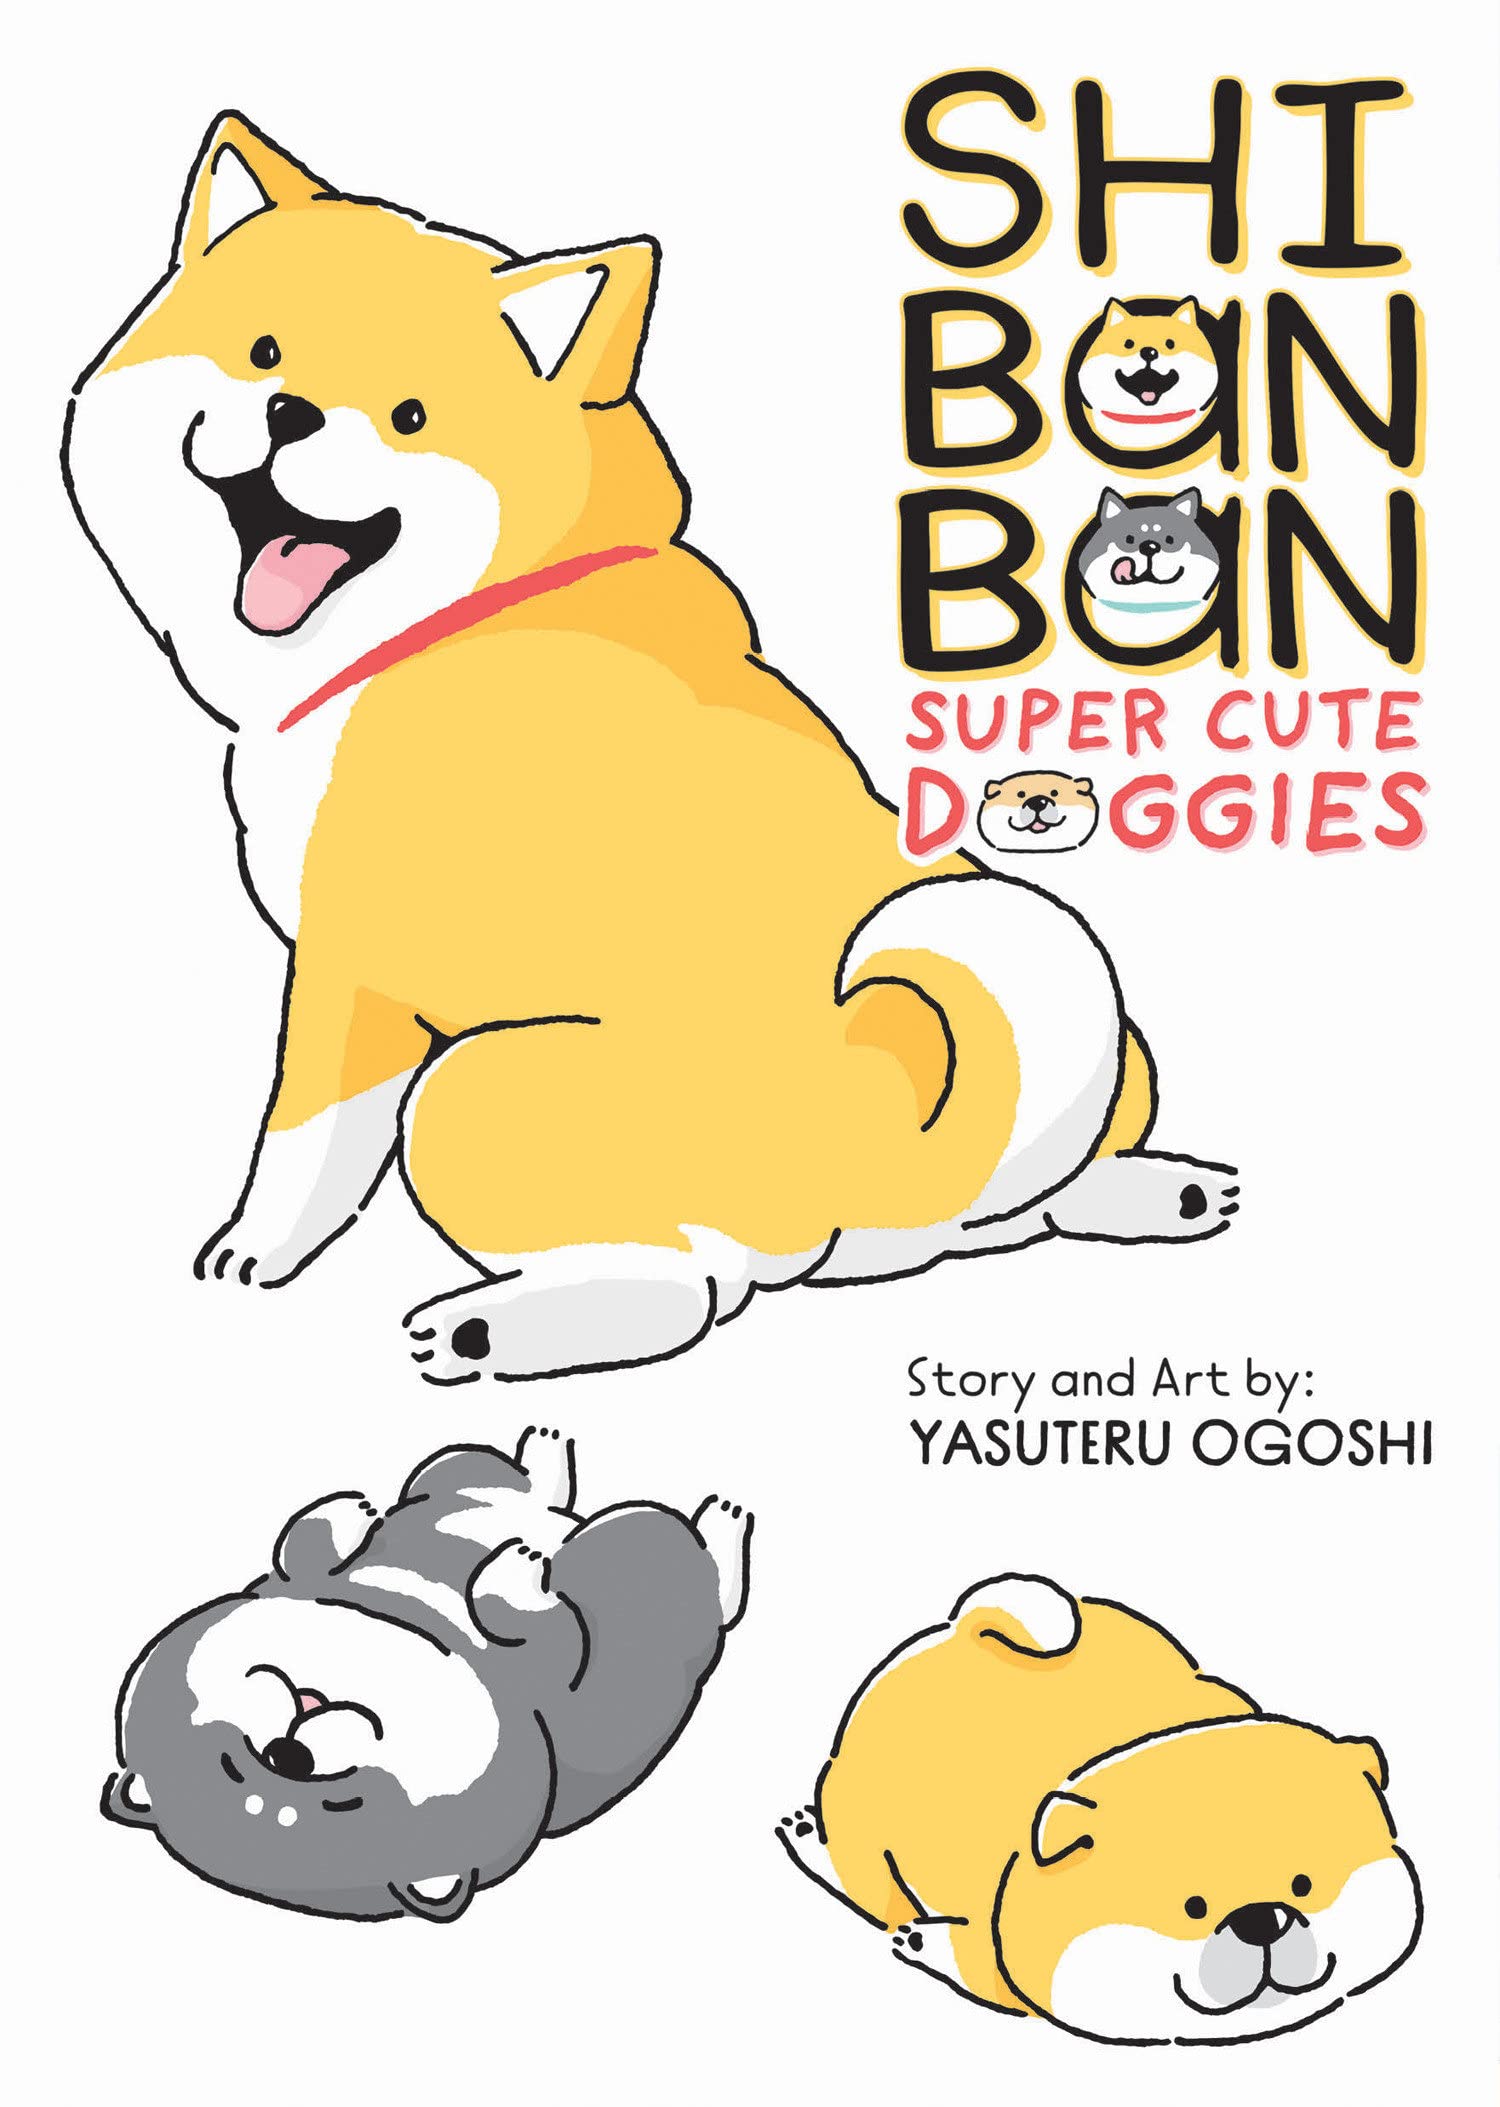 Shibanban: Super Cute Doggies